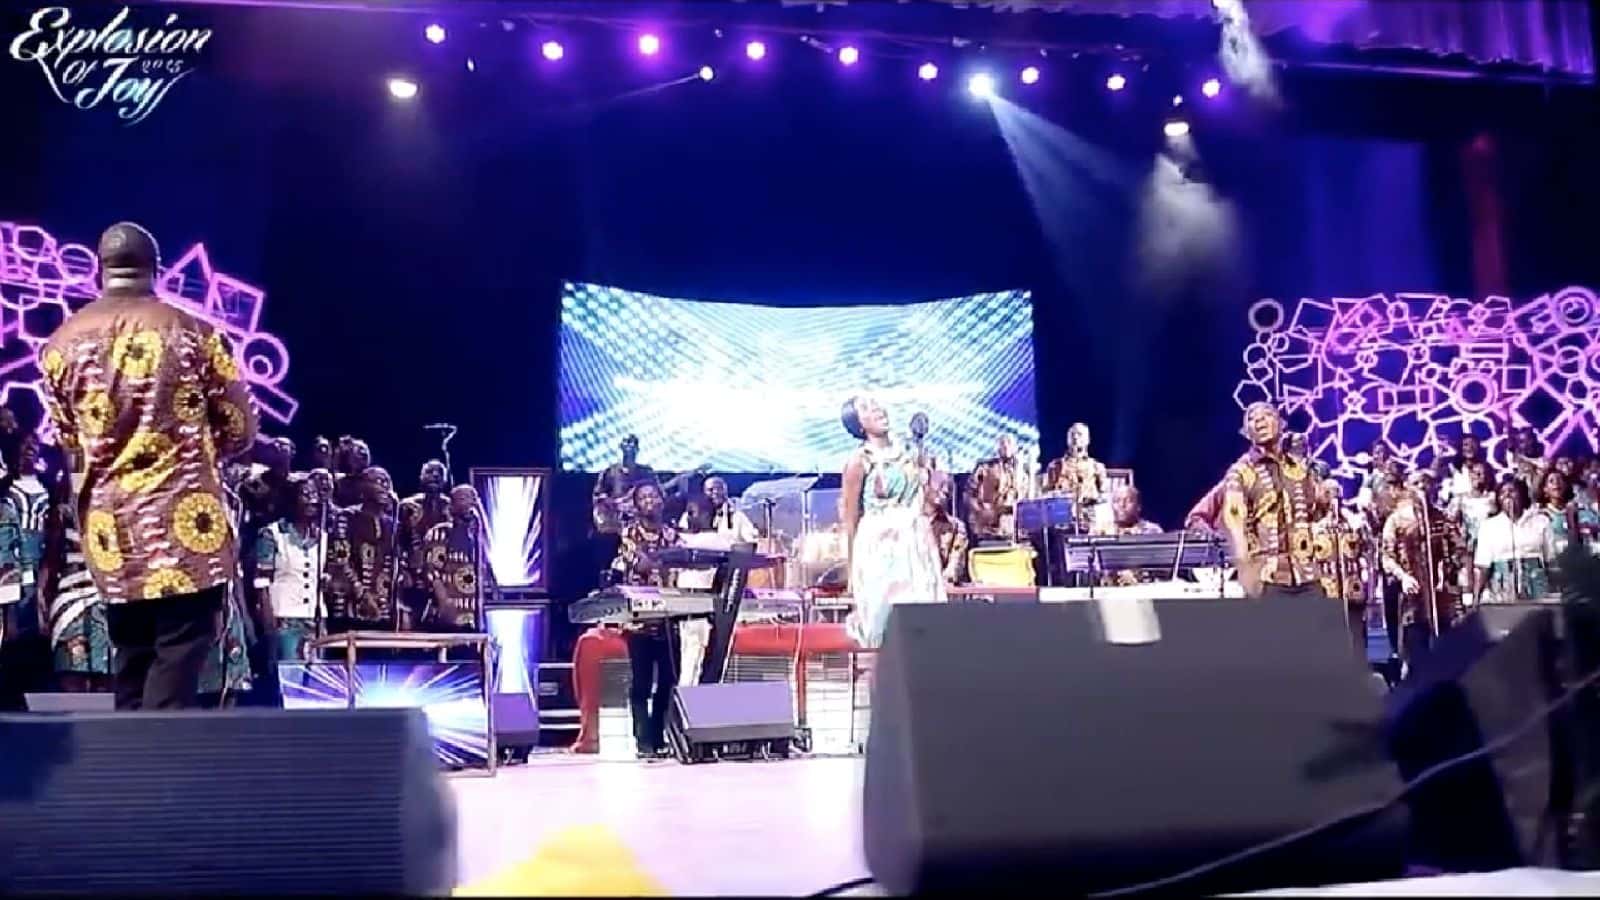 Ghana Praise Medley  - Joyful Way Inc. at Explosion of Joy